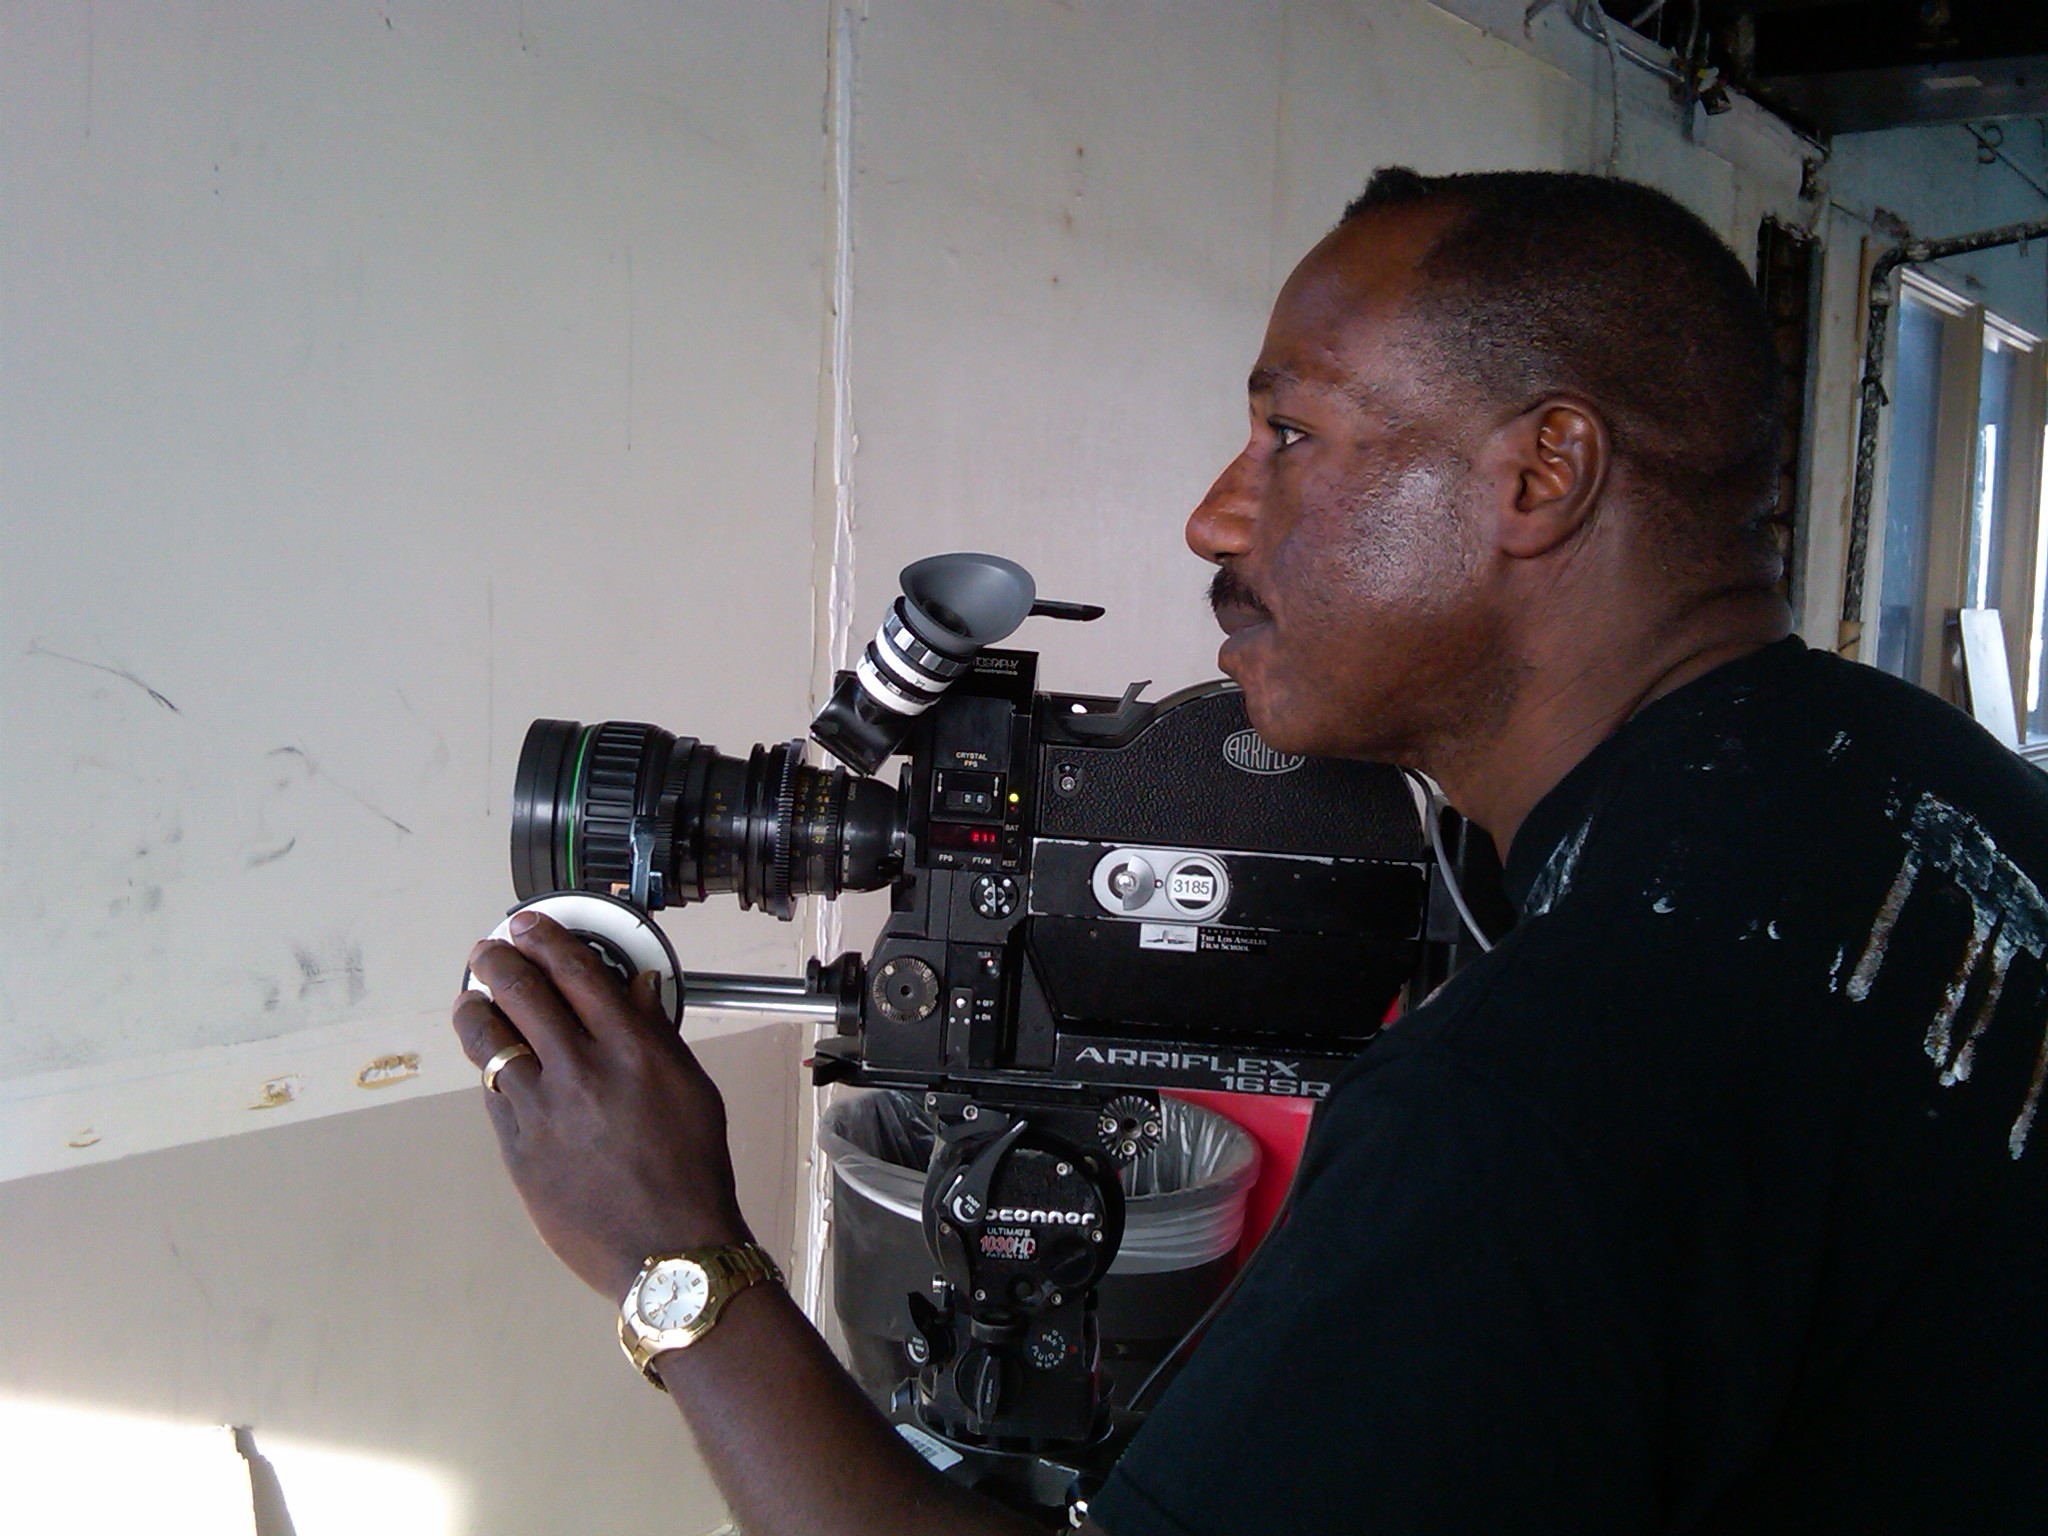 Director Bruce B. Gordon making adjustments on an Arri-SR2 Super 16mm film camera during a shoot in Los Angeles.